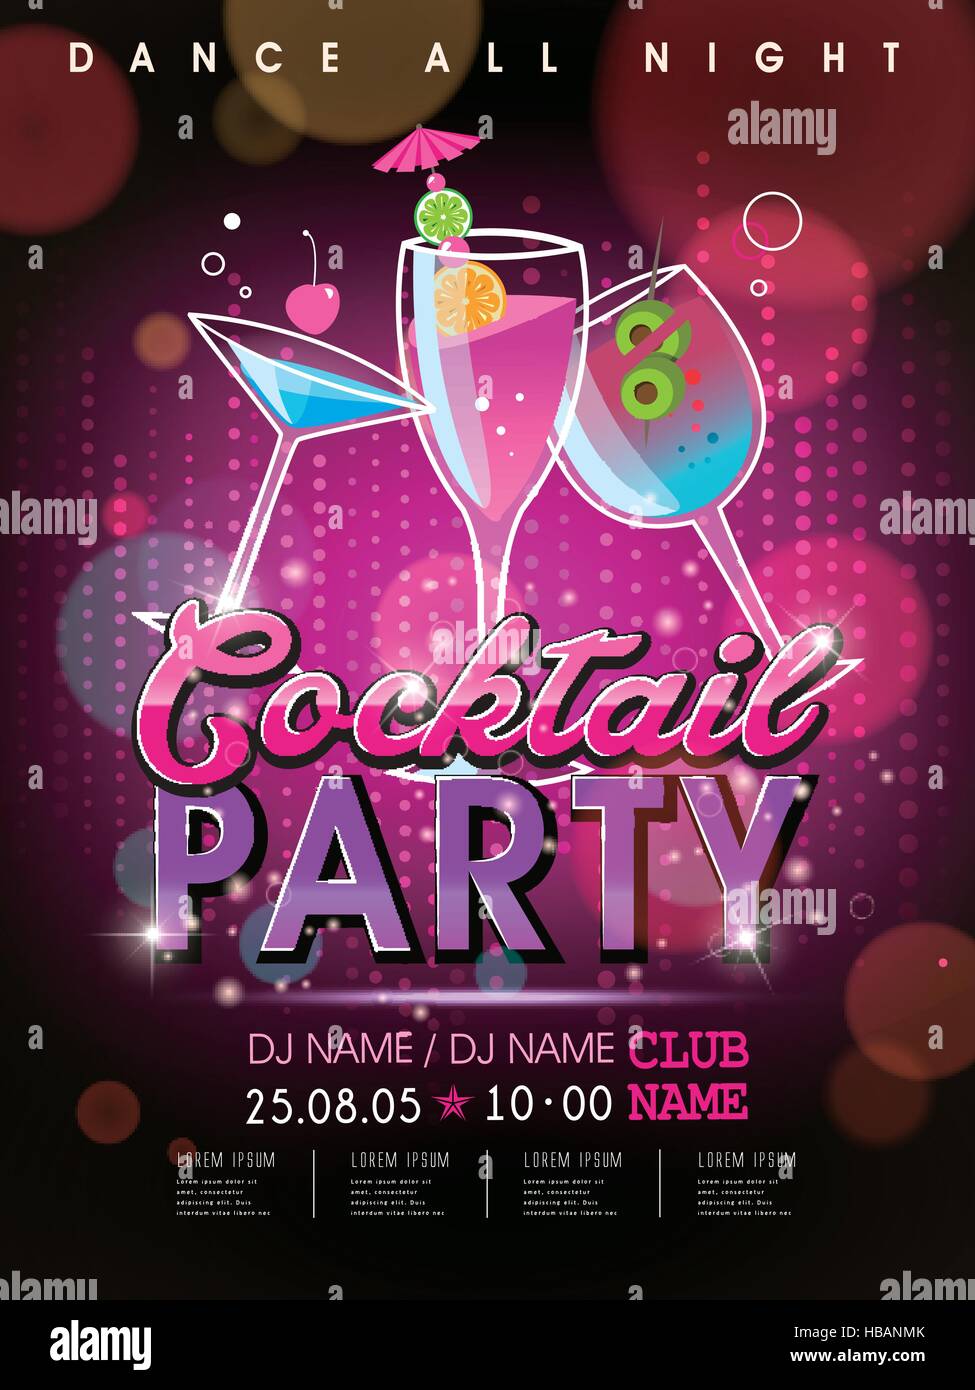 fantastic cocktail party poster design ...